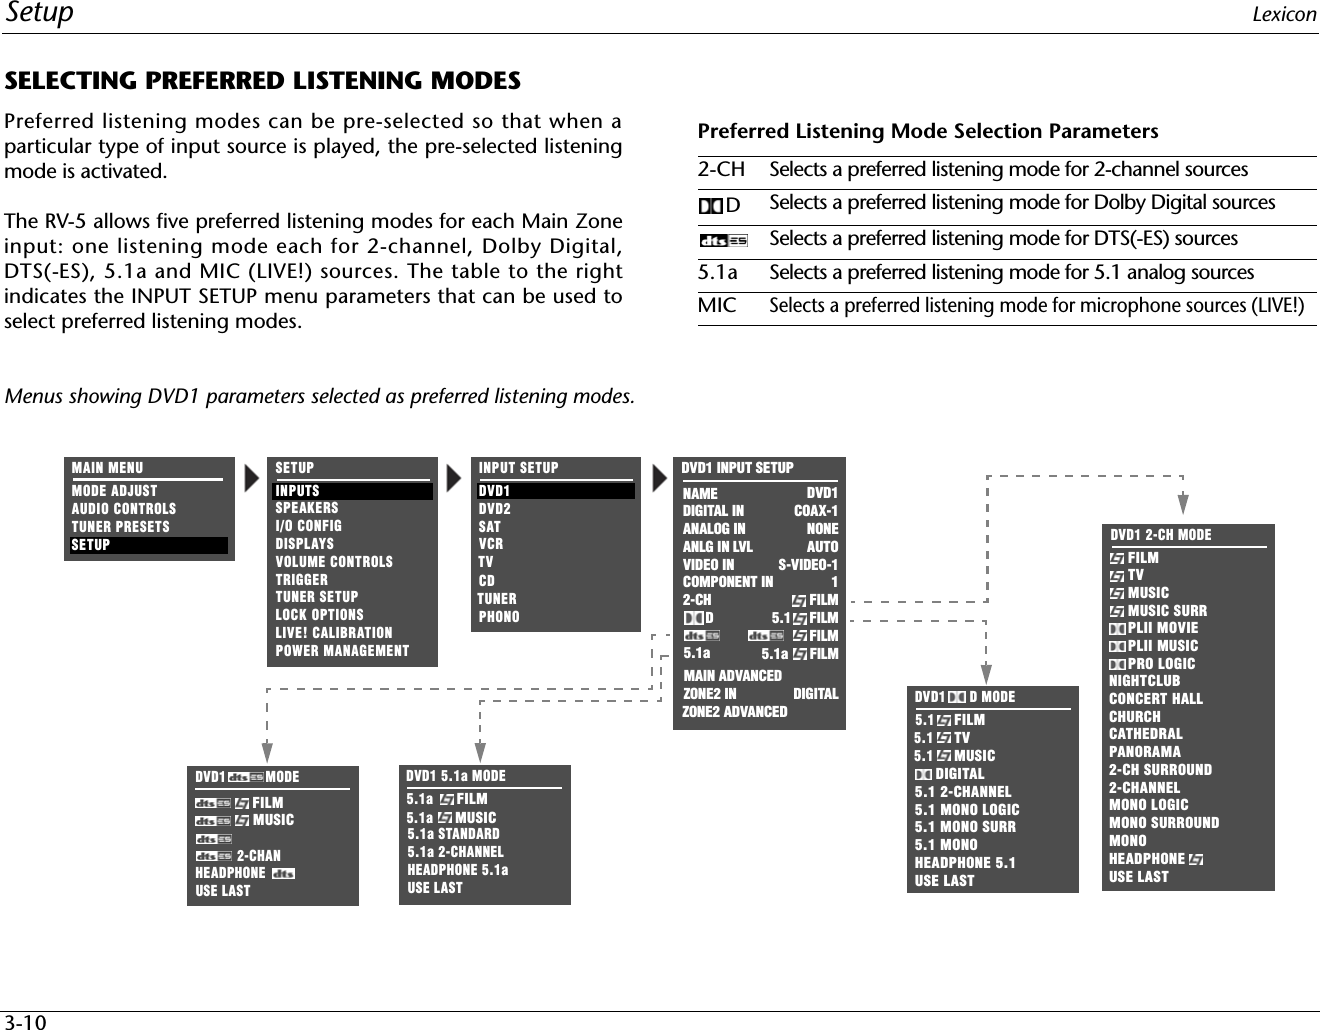 Setup Lexicon3-10SELECTING PREFERRED LISTENING MODESPreferred listening modes can be pre-selected so that when aparticular type of input source is played, the pre-selected listeningmode is activated. The RV-5 allows five preferred listening modes for each Main Zoneinput: one listening mode each for 2-channel, Dolby Digital,DTS(-ES), 5.1a and MIC (LIVE!) sources. The table to the rightindicates the INPUT SETUP menu parameters that can be used toselect preferred listening modes.Menus showing DVD1 parameters selected as preferred listening modes. Preferred Listening Mode Selection Parameters2-CH Selects a preferred listening mode for 2-channel sourcesDSelects a preferred listening mode for Dolby Digital sourcesSelects a preferred listening mode for DTS(-ES) sources5.1a Selects a preferred listening mode for 5.1 analog sourcesMICSelects a preferred listening mode for microphone sources (LIVE!)DVD1 2-CH MODEFILMTVMUSICMUSIC SURRPLII MOVIEPLII MUSICPRO LOGICNIGHTCLUBCONCERT HALLCHURCHCATHEDRALPANORAMA2-CH SURROUND2-CHANNELMONO LOGICMONO SURROUNDMONOHEADPHONEDVD1      D MODEFILMTVMUSICDIGITAL5.1 2-CHANNEL5.15.15.15.1 MONO LOGIC5.1 MONO SURR5.1 MONOHEADPHONE 5.1DVD1          MODEFILMMUSIC2-CHANHEADPHONEDVD1 INPUT SETUPNAMEDIGITAL INANALOG INVIDEO INCOMPONENT IN2-CH      DDVD1COAX-1NONEAUTOS-VIDEO-11FILM5.1     FILMFILMANLG IN LVLMAIN ADVANCEDZONE2 IN DIGITALZONE2 ADVANCED5.1a FILM5.1a INPUT SETUPDVD2TVSATVCRCDTUNERPHONODVD1MAIN MENUMODE ADJUSTAUDIO CONTROLSTUNER PRESETSSETUPSETUPINPUTSSPEAKERSI/O CONFIGDISPLAYSVOLUME CONTROLSTRIGGERLOCK OPTIONSLIVE! CALIBRATIONTUNER SETUPUSE LASTUSE LASTUSE LASTDVD1 5.1a MODEFILMMUSIC5.1a5.1a5.1a STANDARD5.1a 2-CHANNELHEADPHONE 5.1aUSE LASTPOWER MANAGEMENT